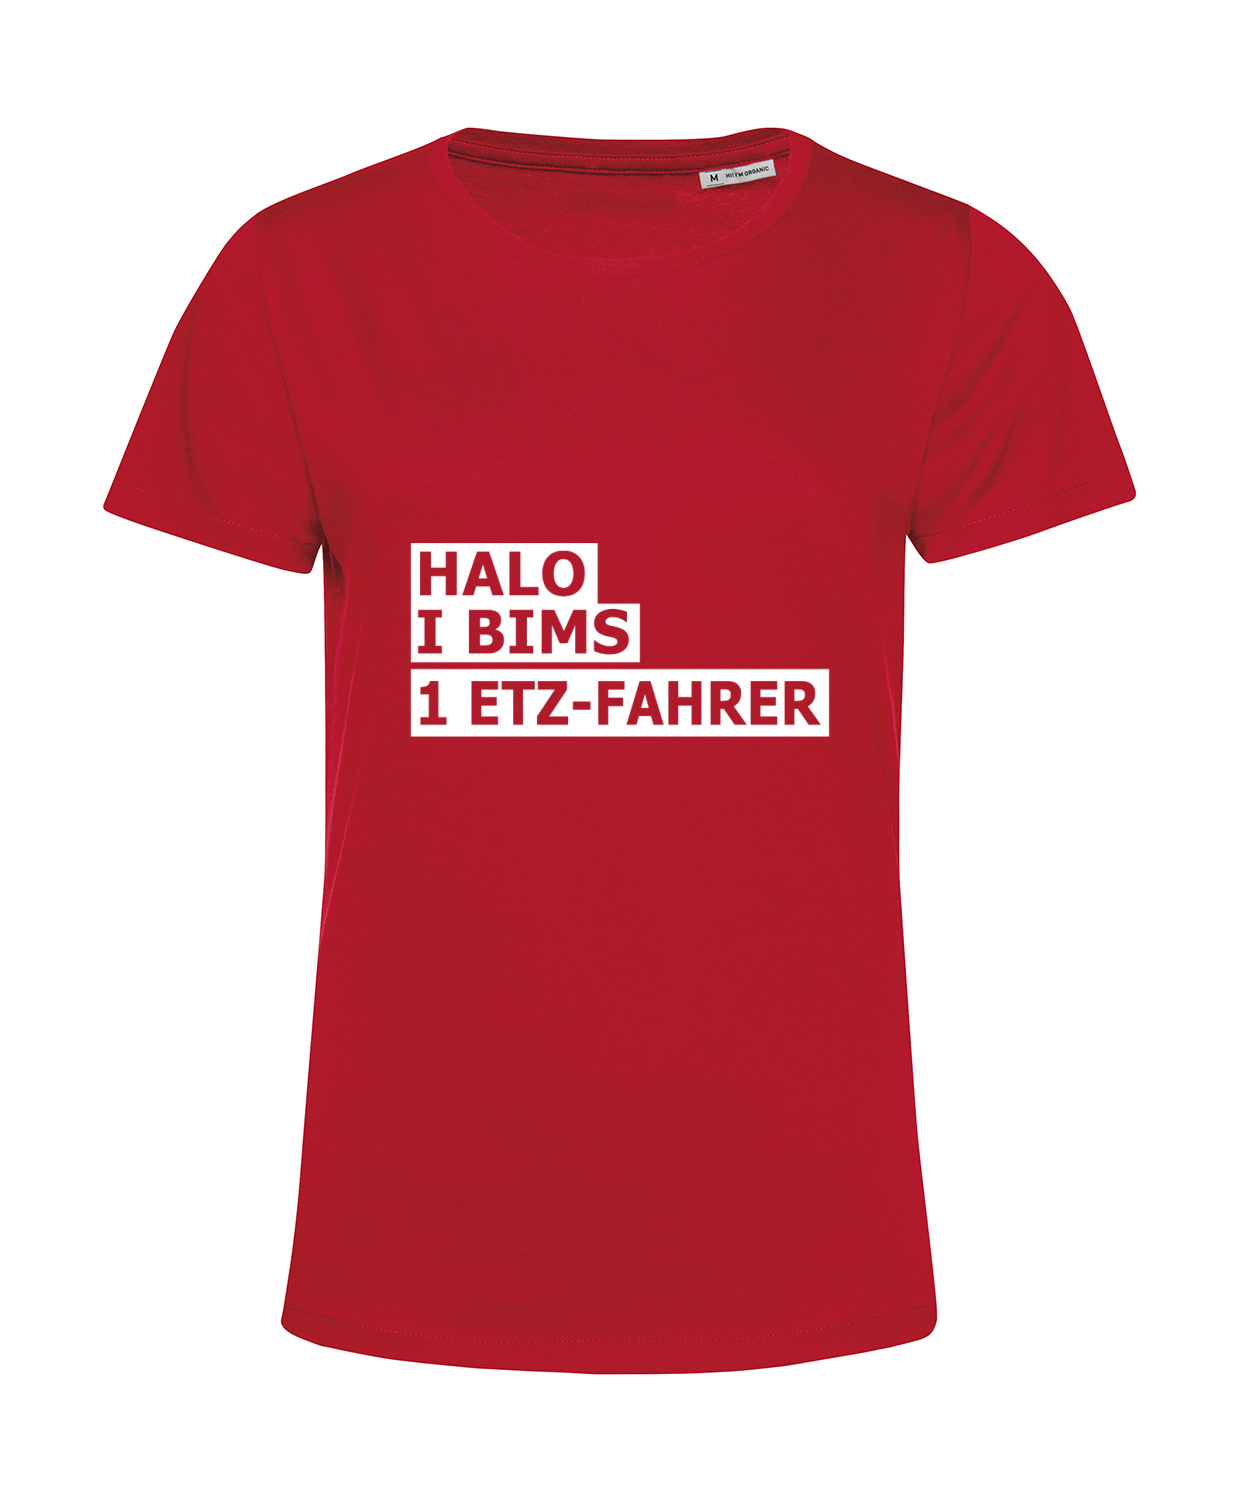 Nachhaltiges T-Shirt Damen 2Takter - Halo I bims 1 ETZ-Fahrer